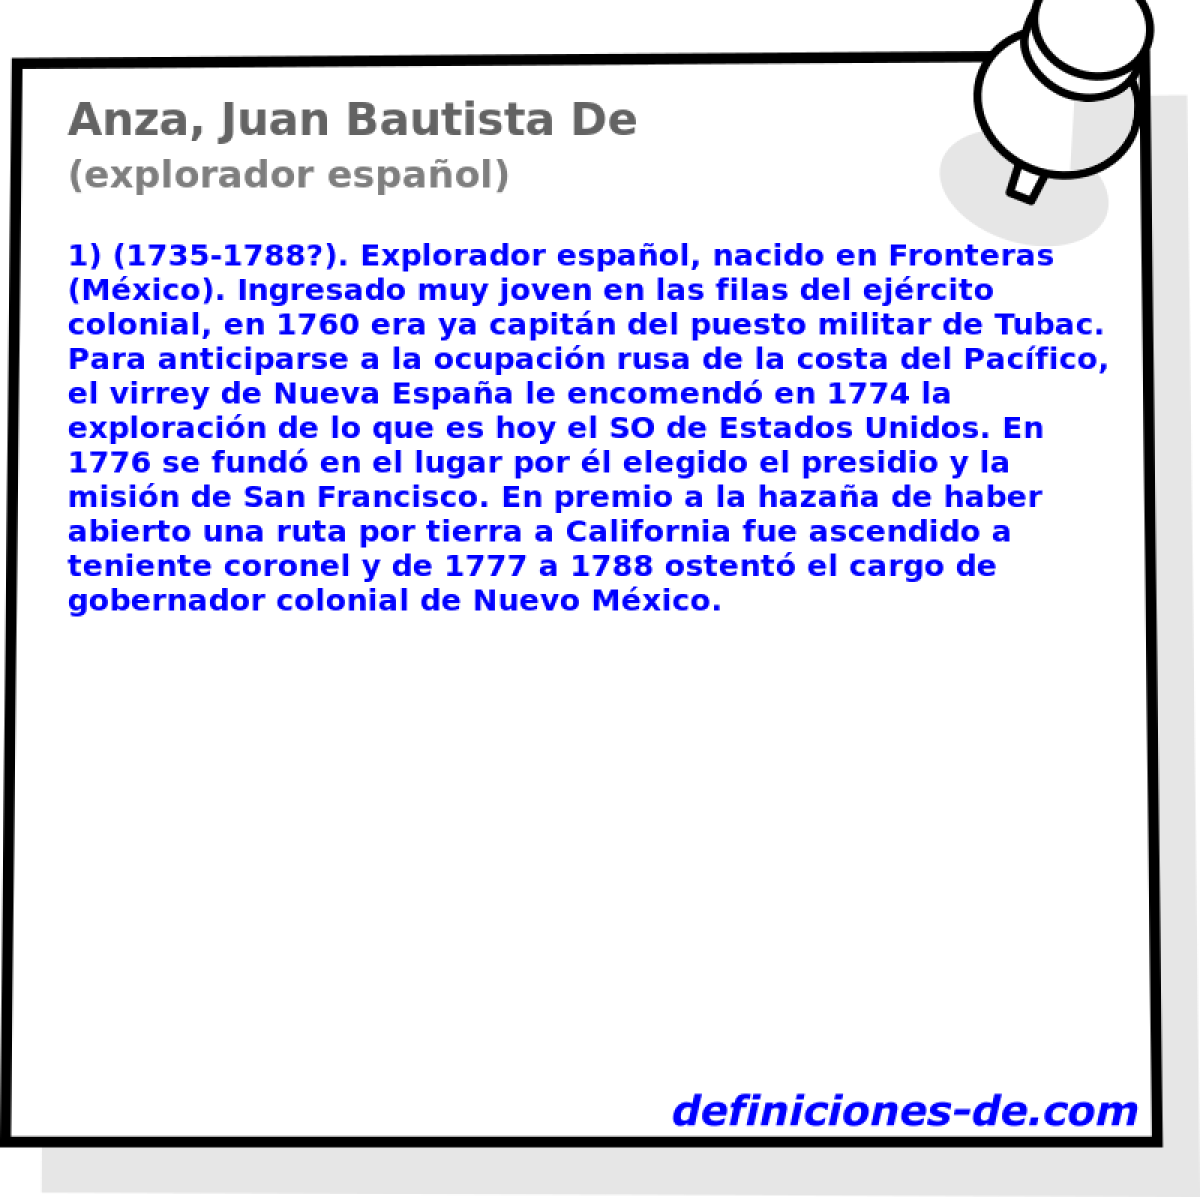 Anza, Juan Bautista De (explorador espaol)